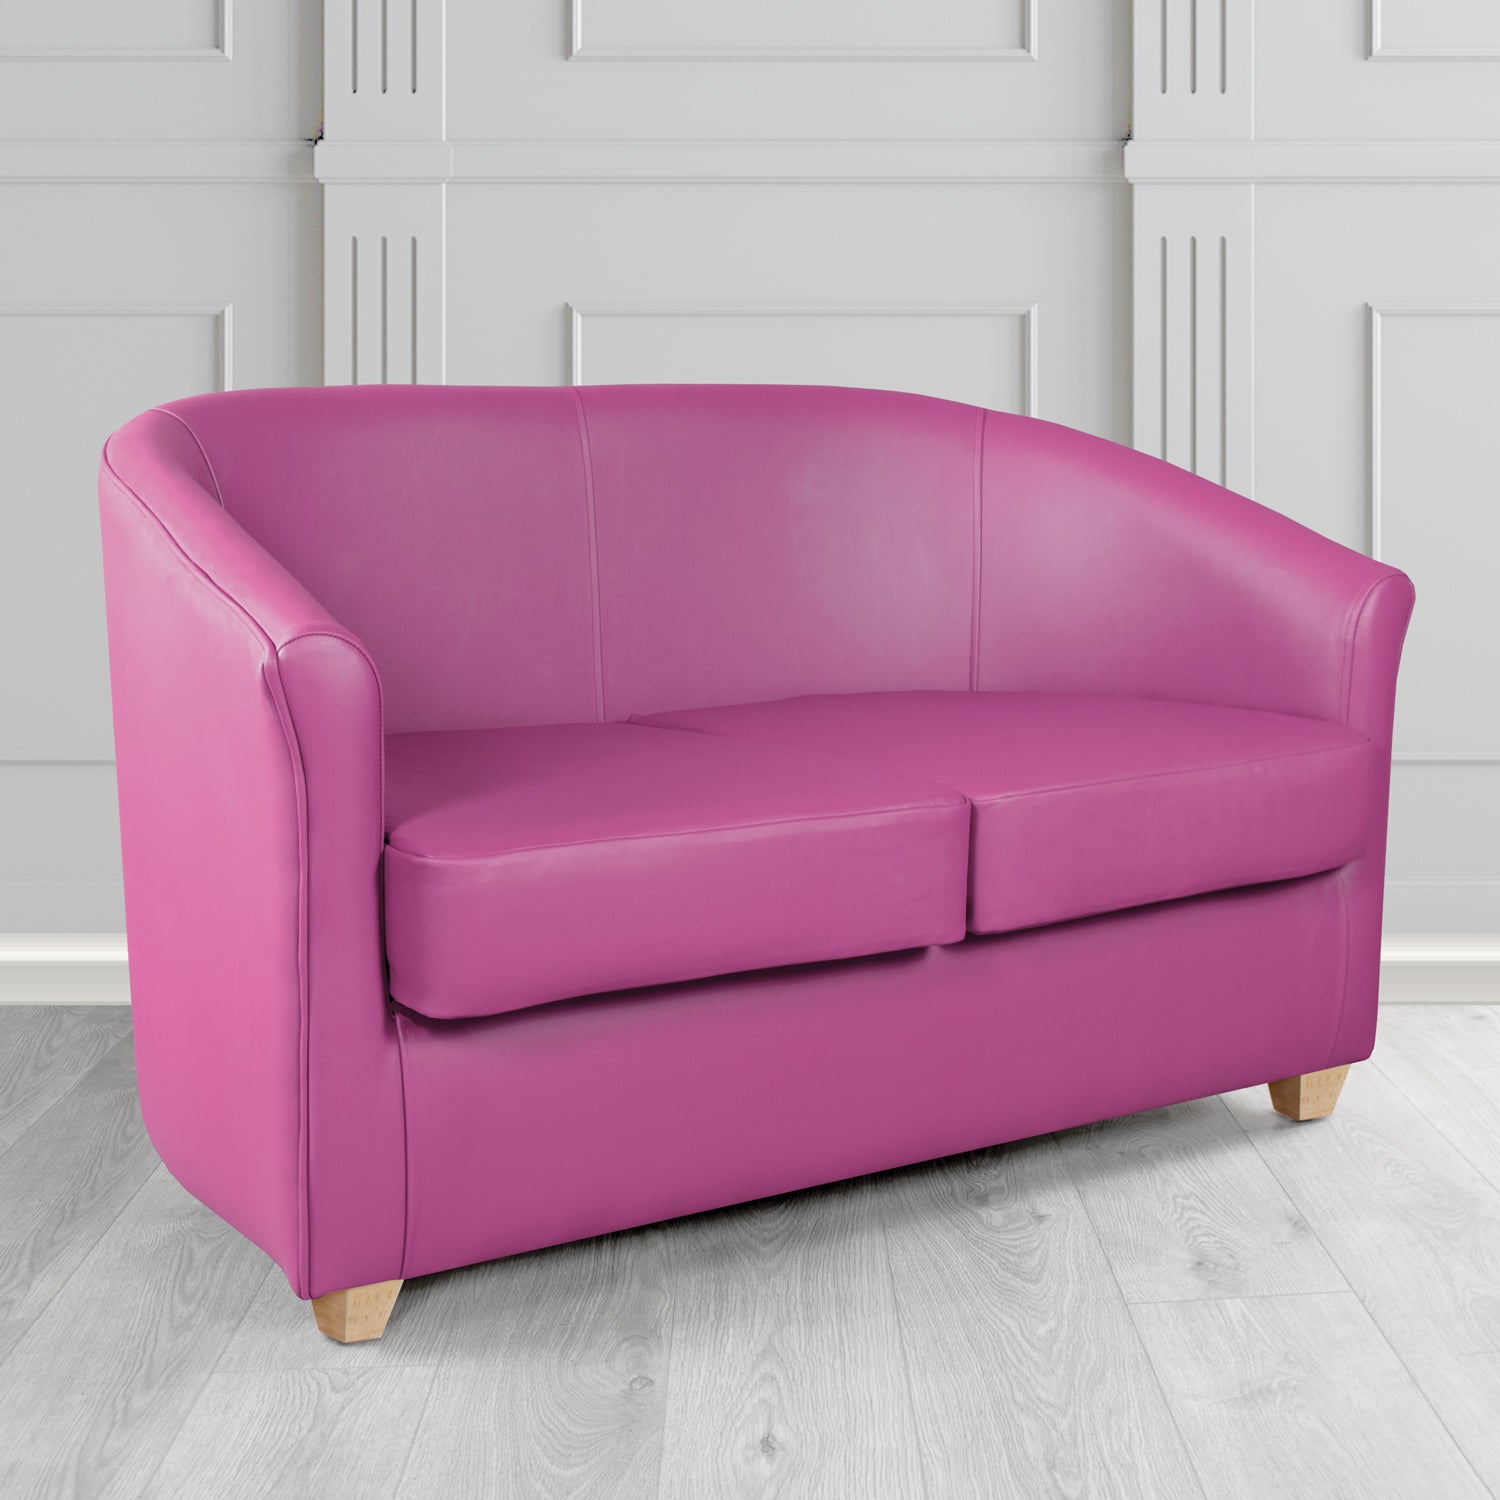 Cannes 2 Seater Tub Sofa in Just Colour Fuchsia Crib 5 Faux Leather - The Tub Chair Shop